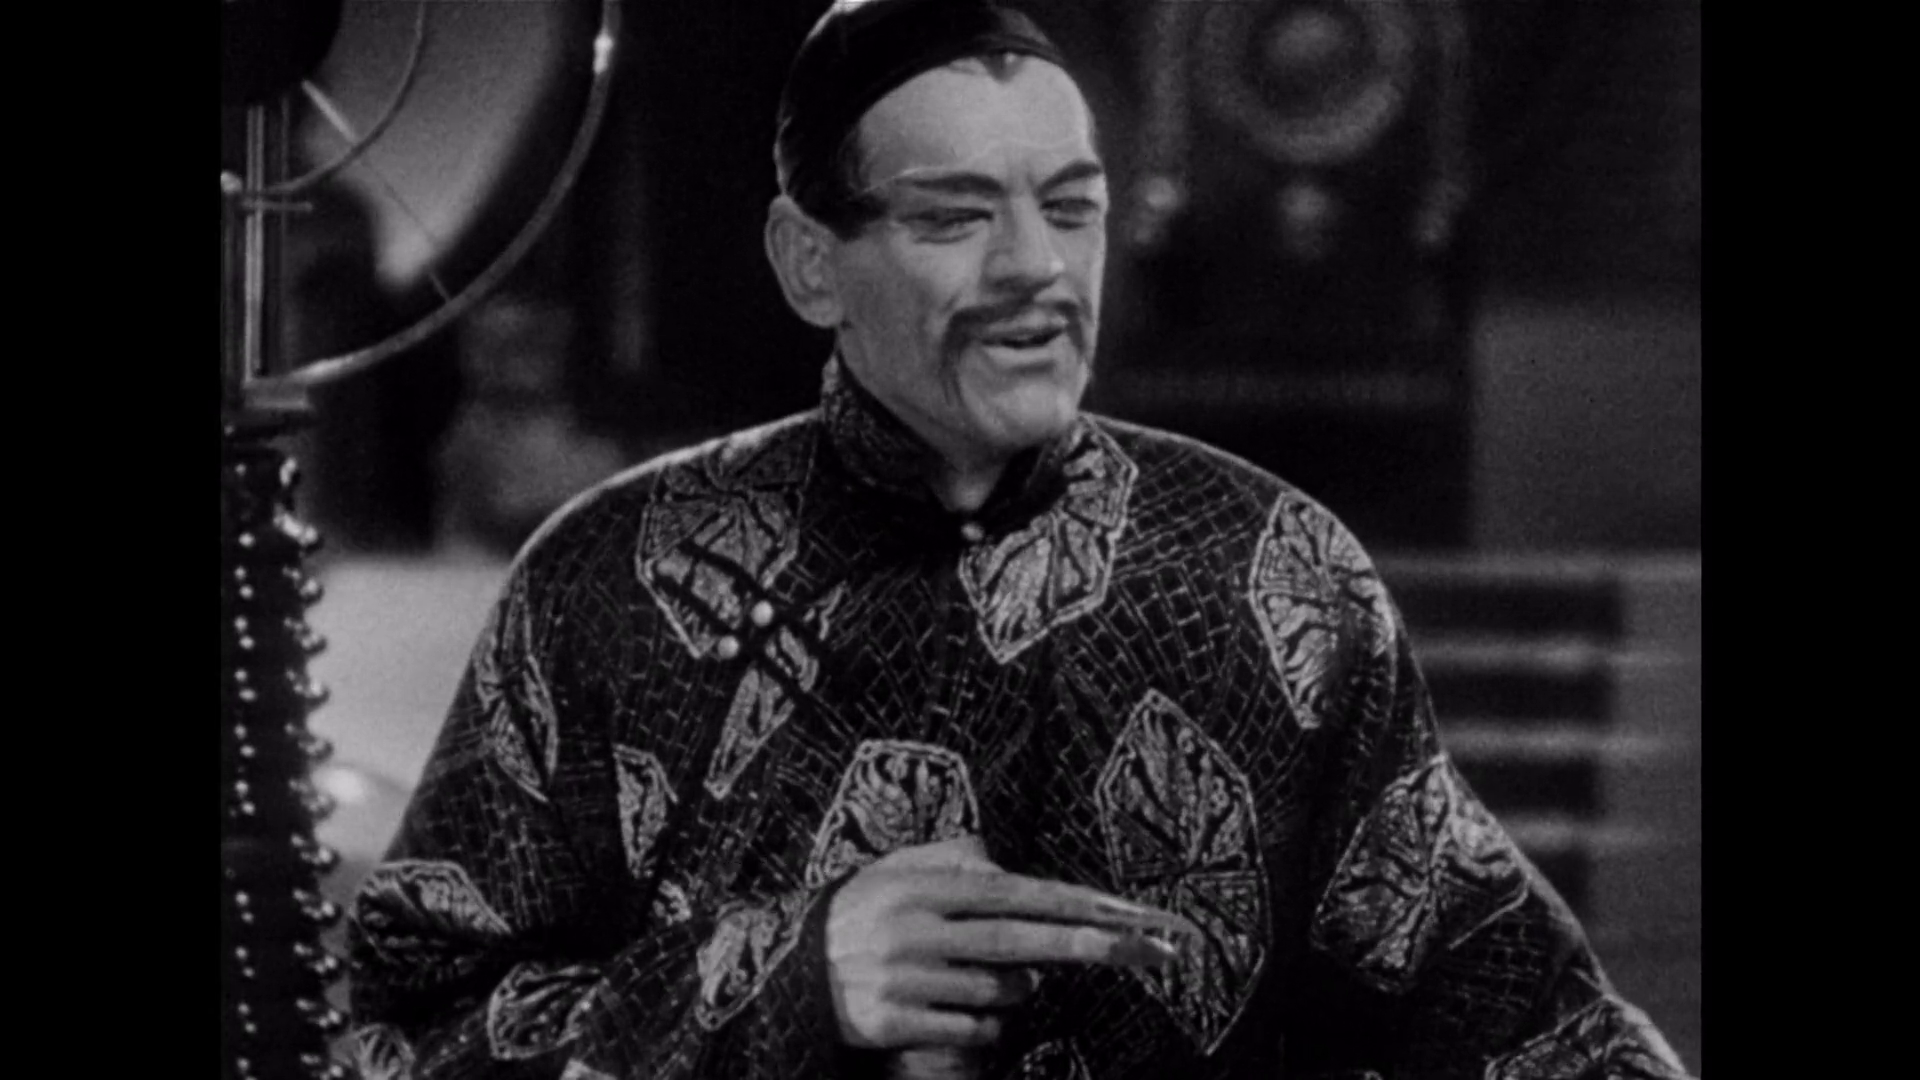 Boris Karloff dans le film The mask of Fu Manchu (Le masque d'or, 1932) de Charles Brabin